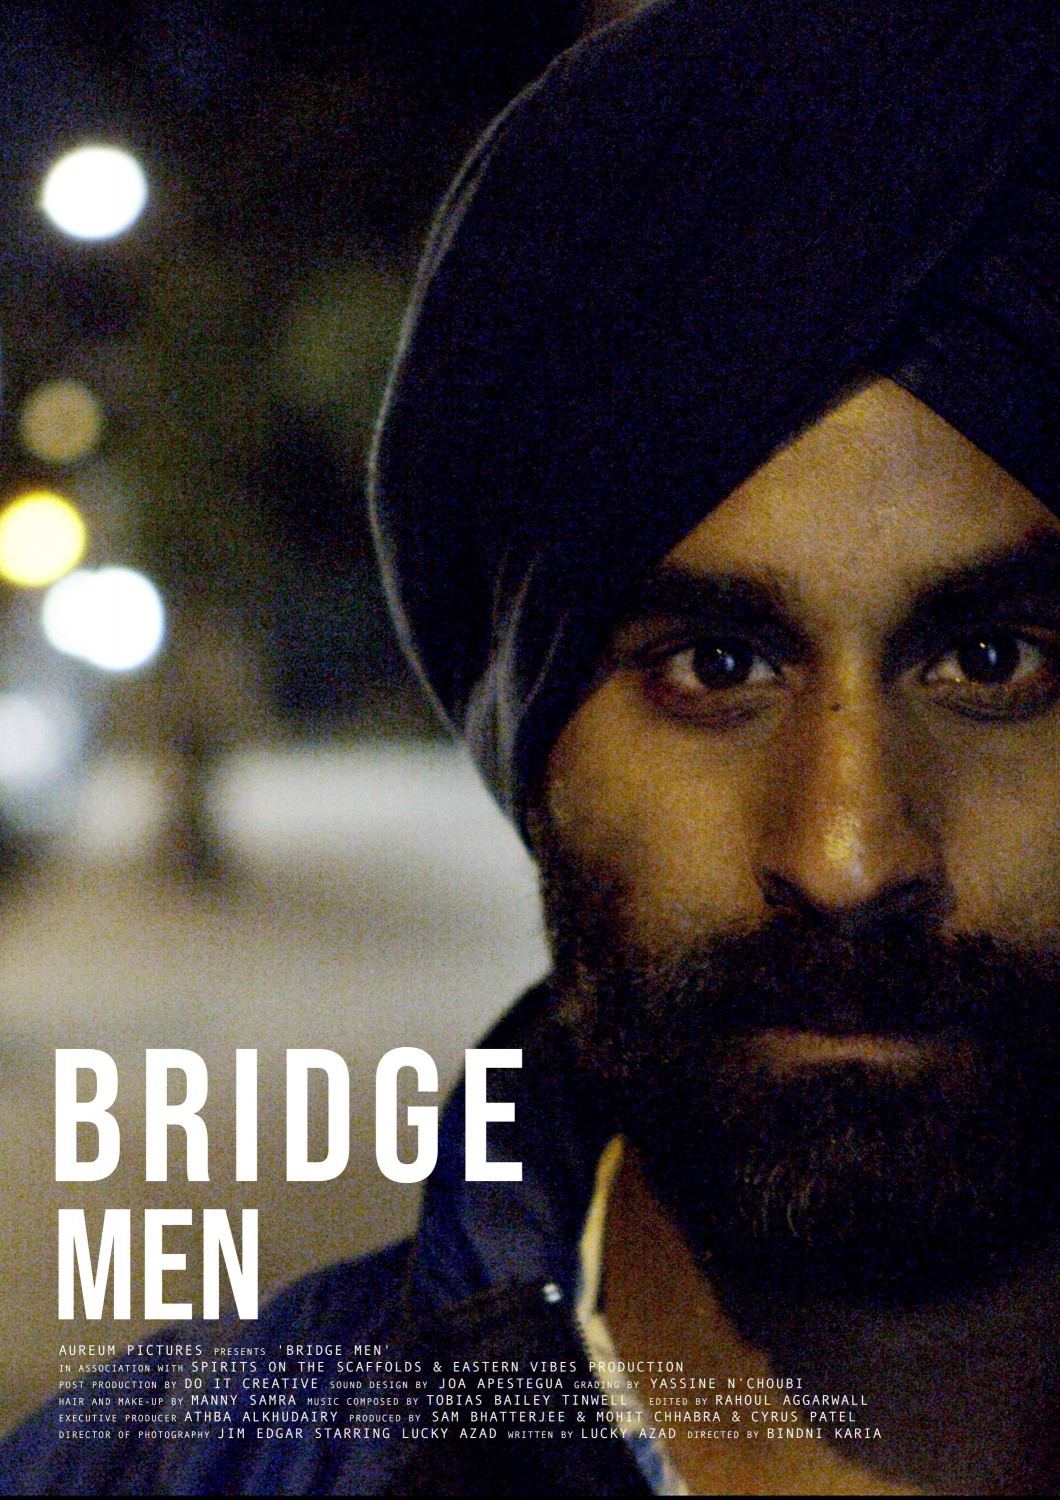 Extra Large Movie Poster Image for Bridge Men